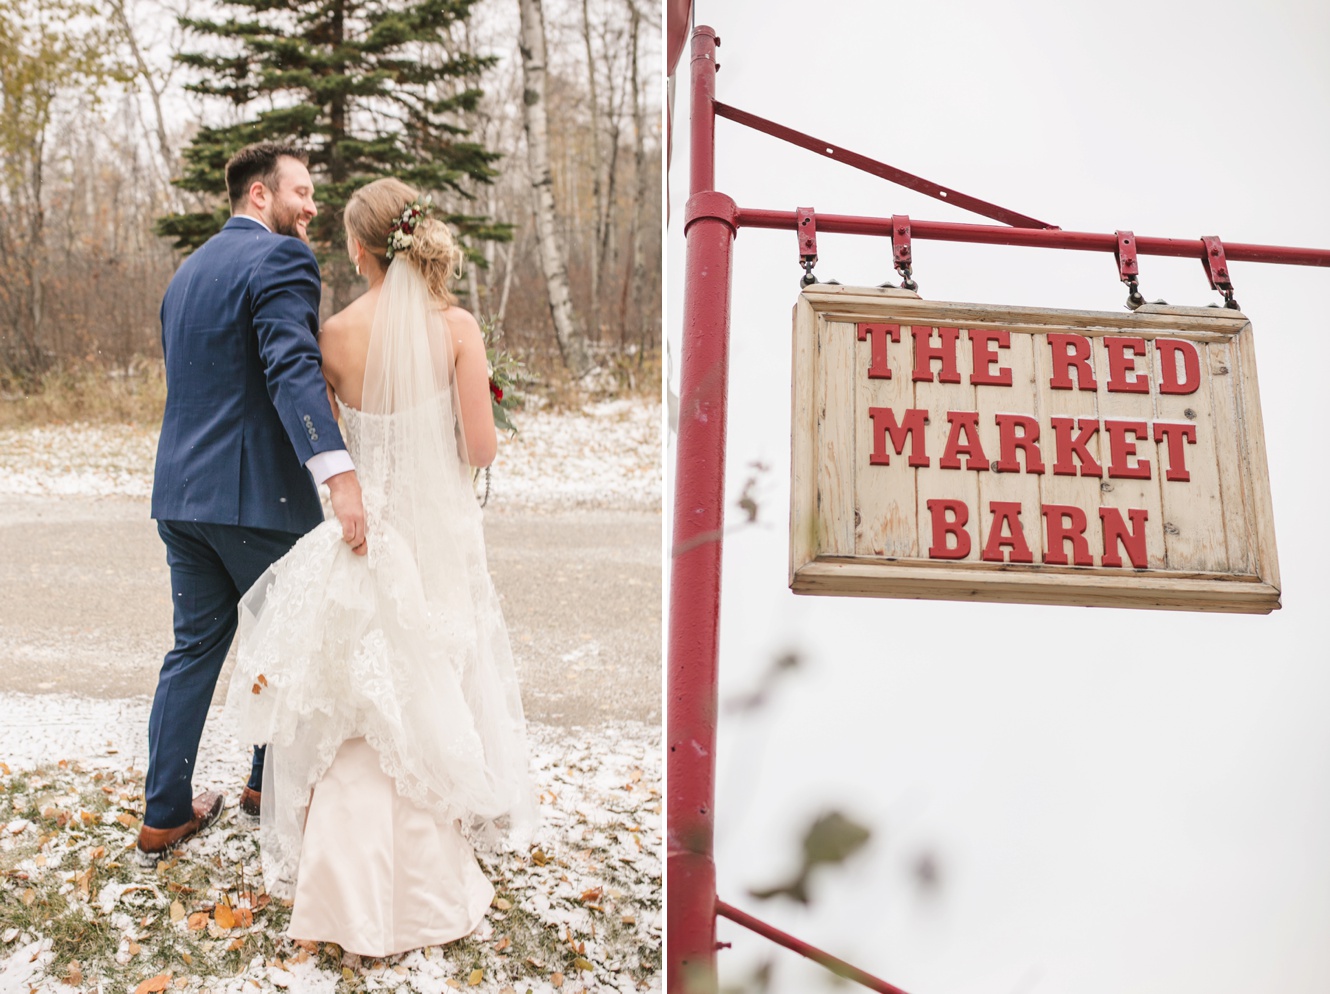 The red barn market wedding photo